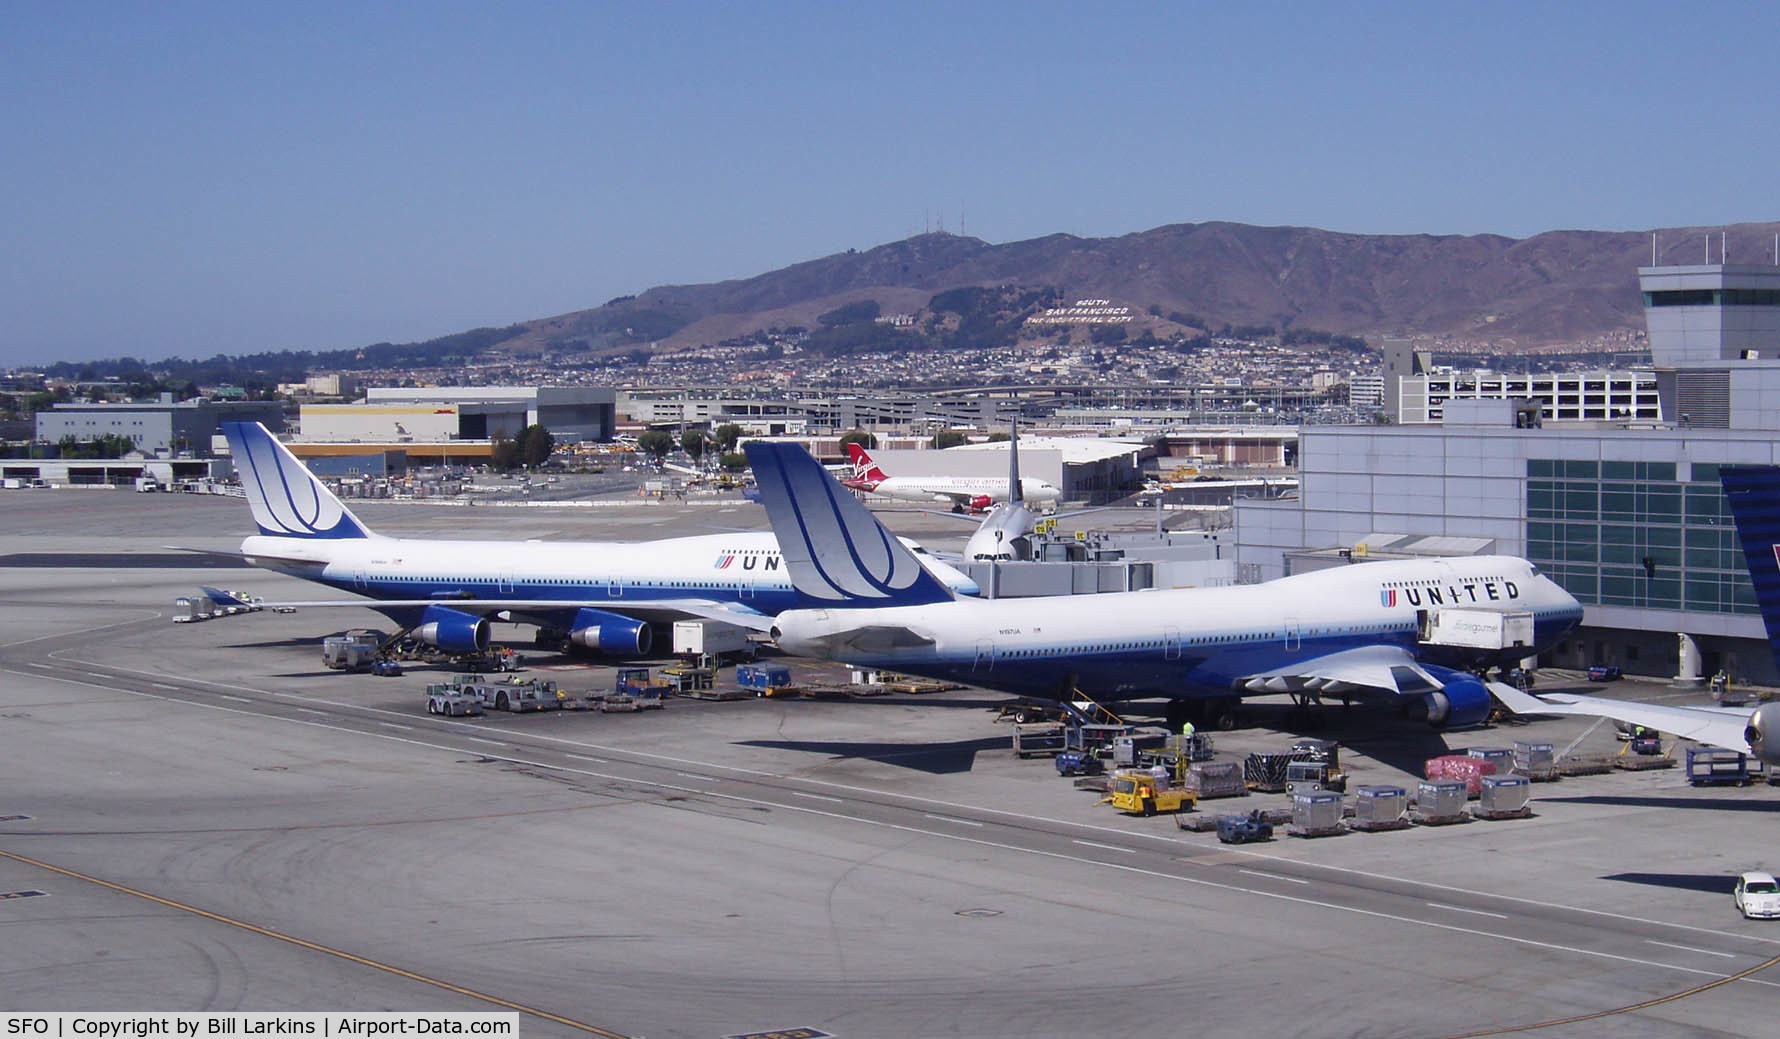 San Francisco International Airport (SFO) - United Air Lines